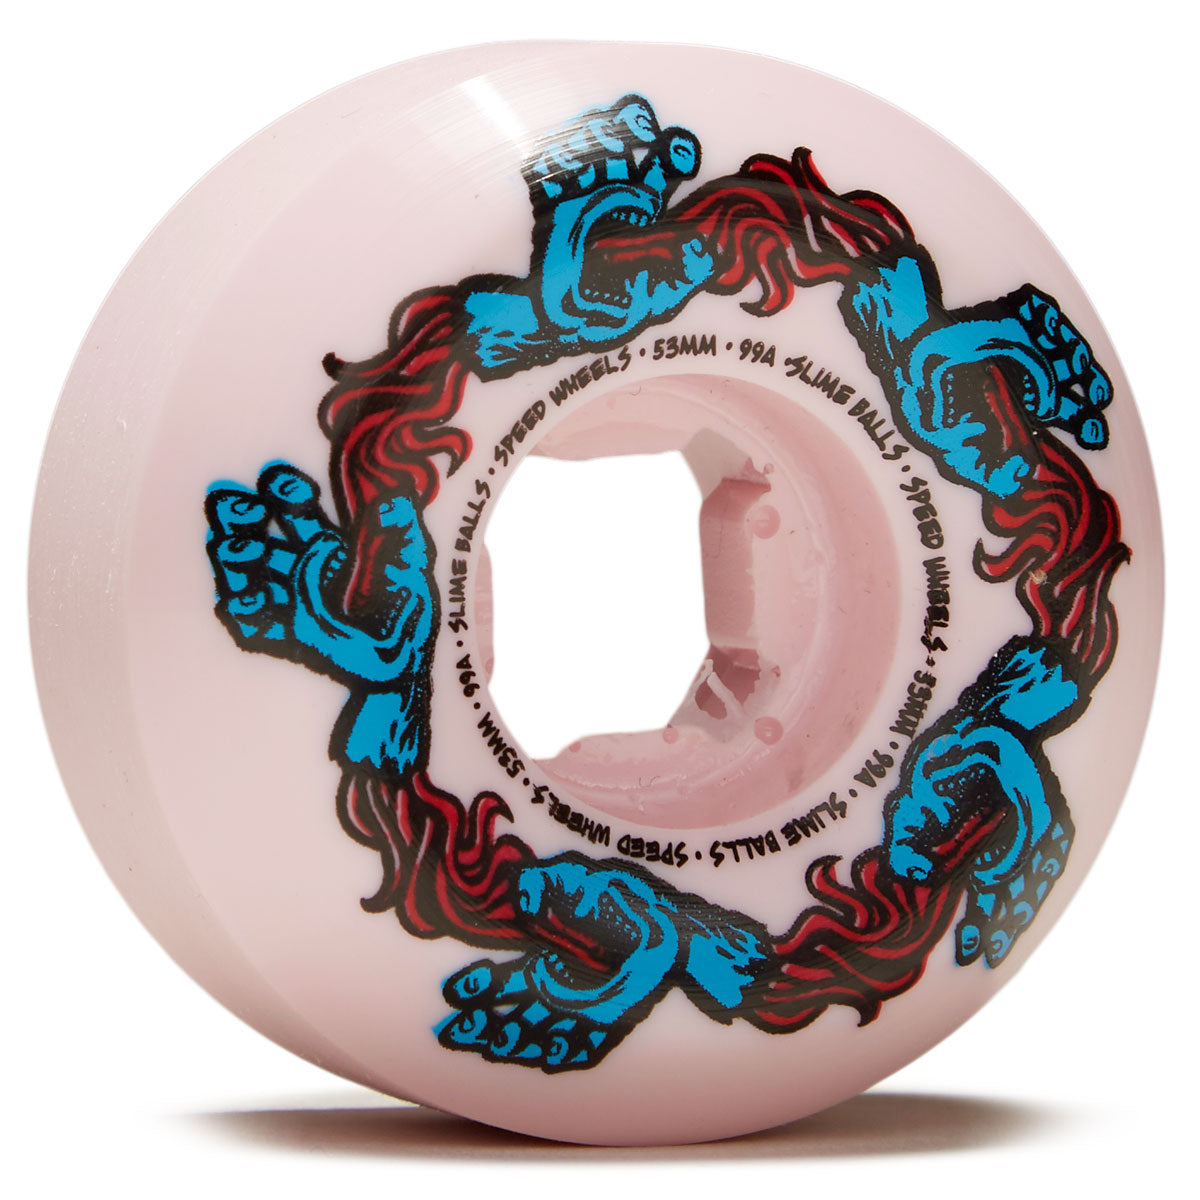 Slime Balls Infinity Hand Speed Balls 99a Skateboard Wheels - Pink - 53mm image 1